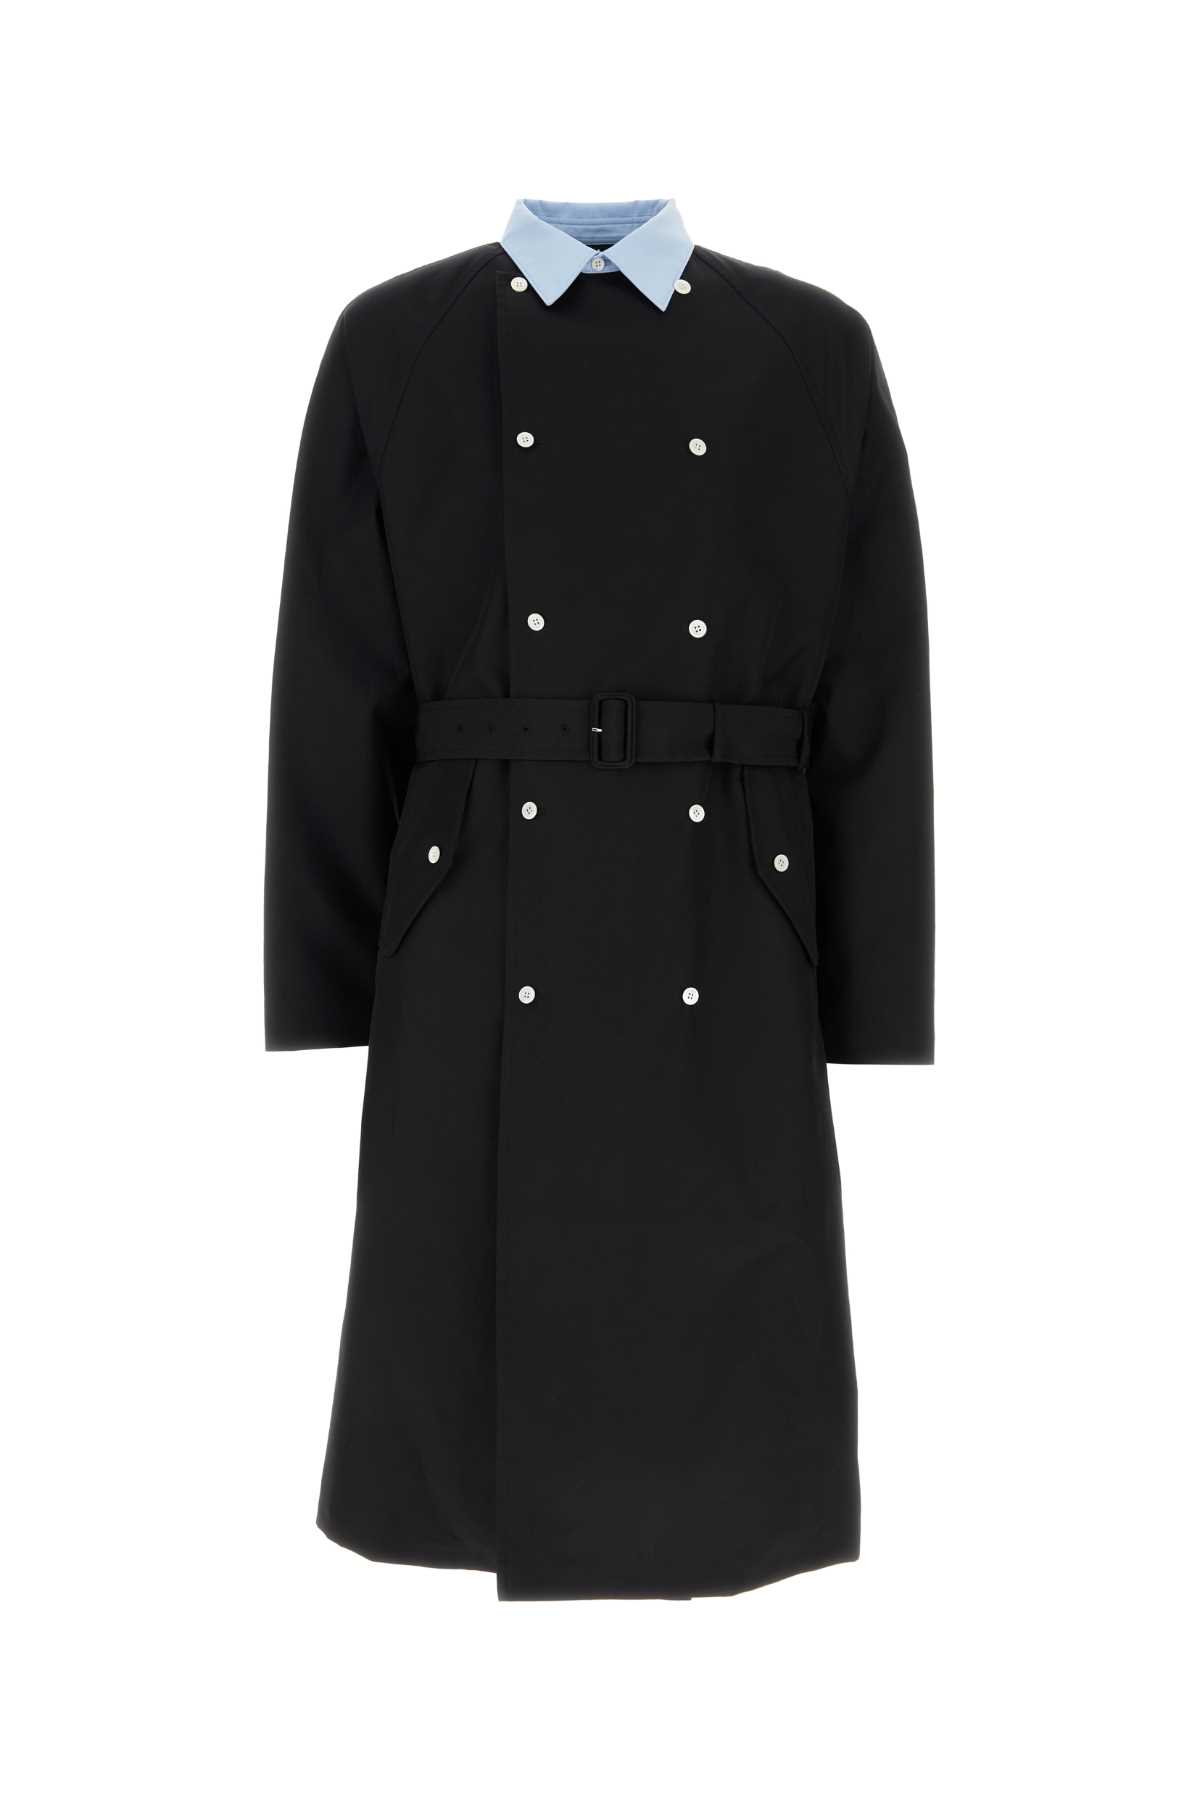 Prada Black Cotton Trench Coat